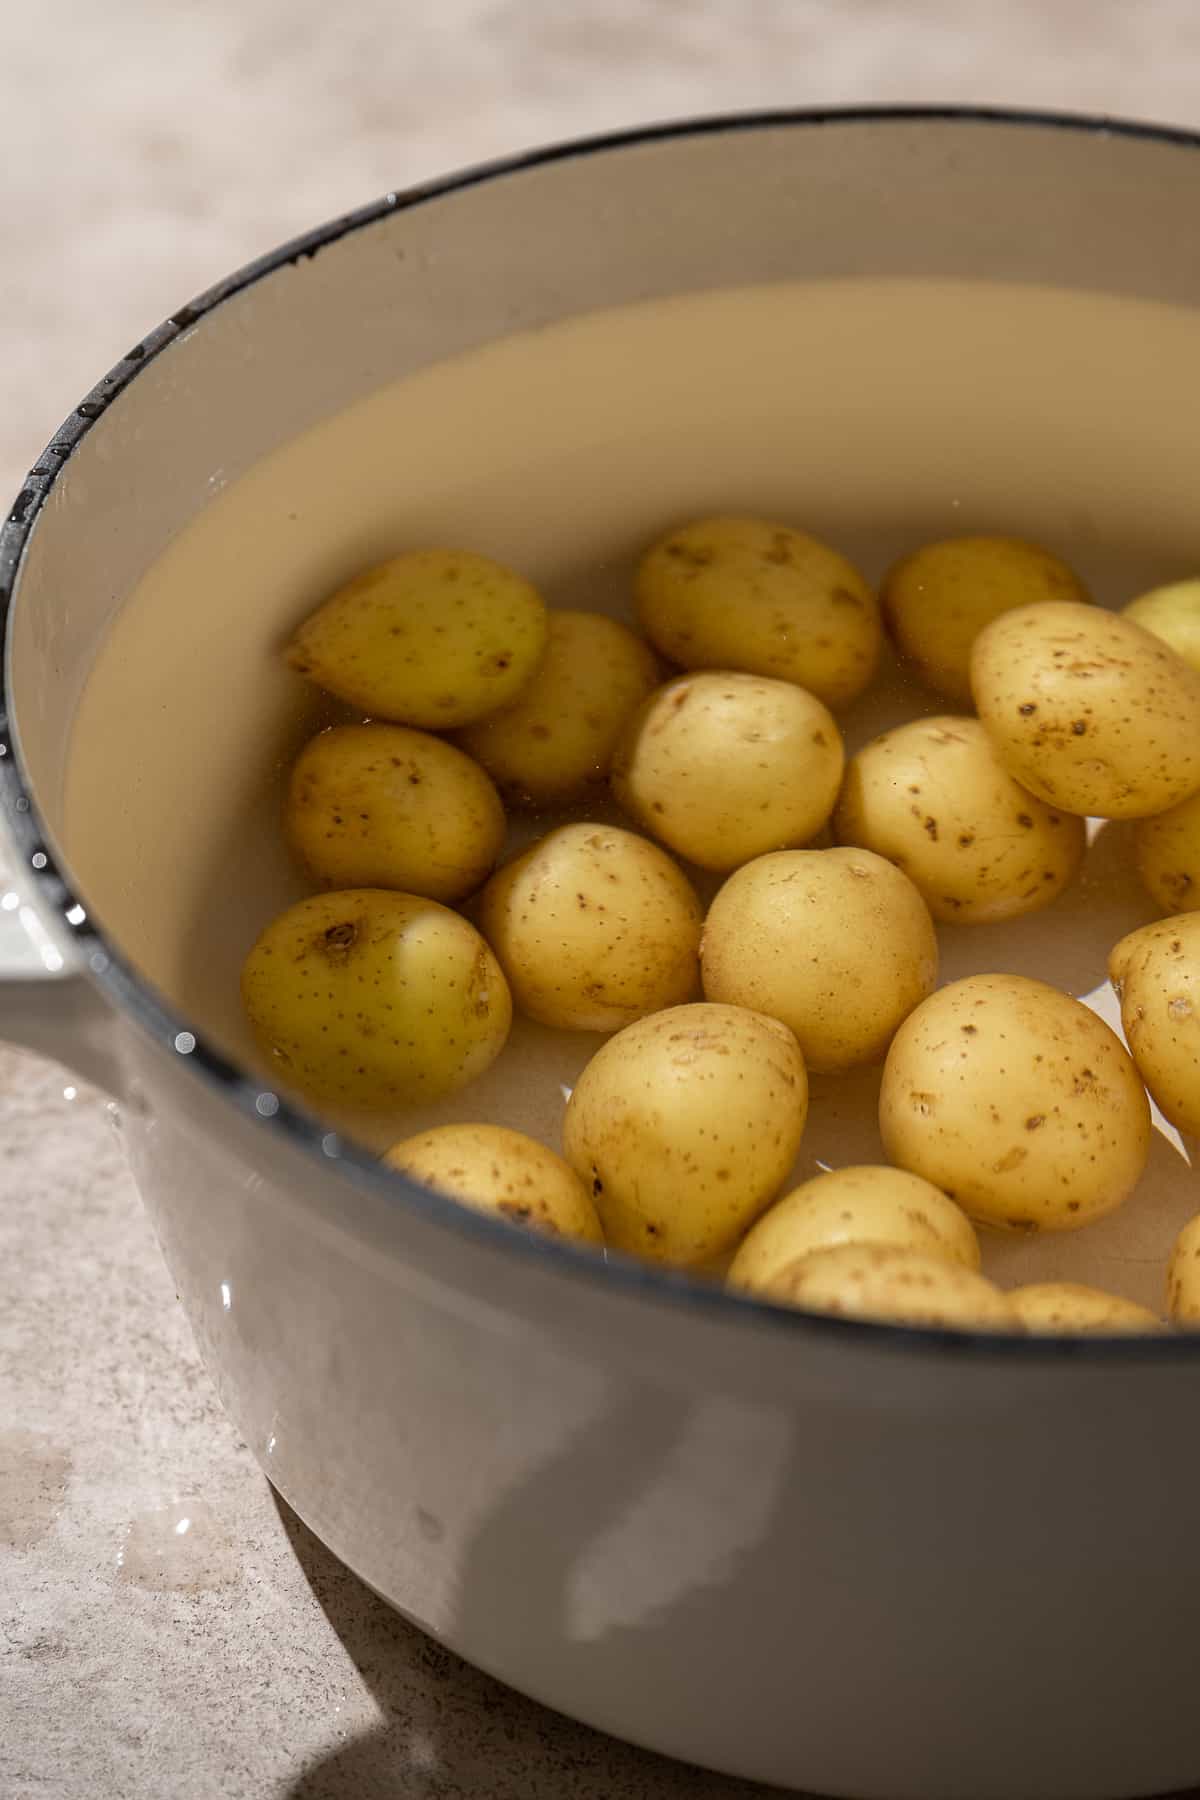 yukon gold potatoes in a pot of water.